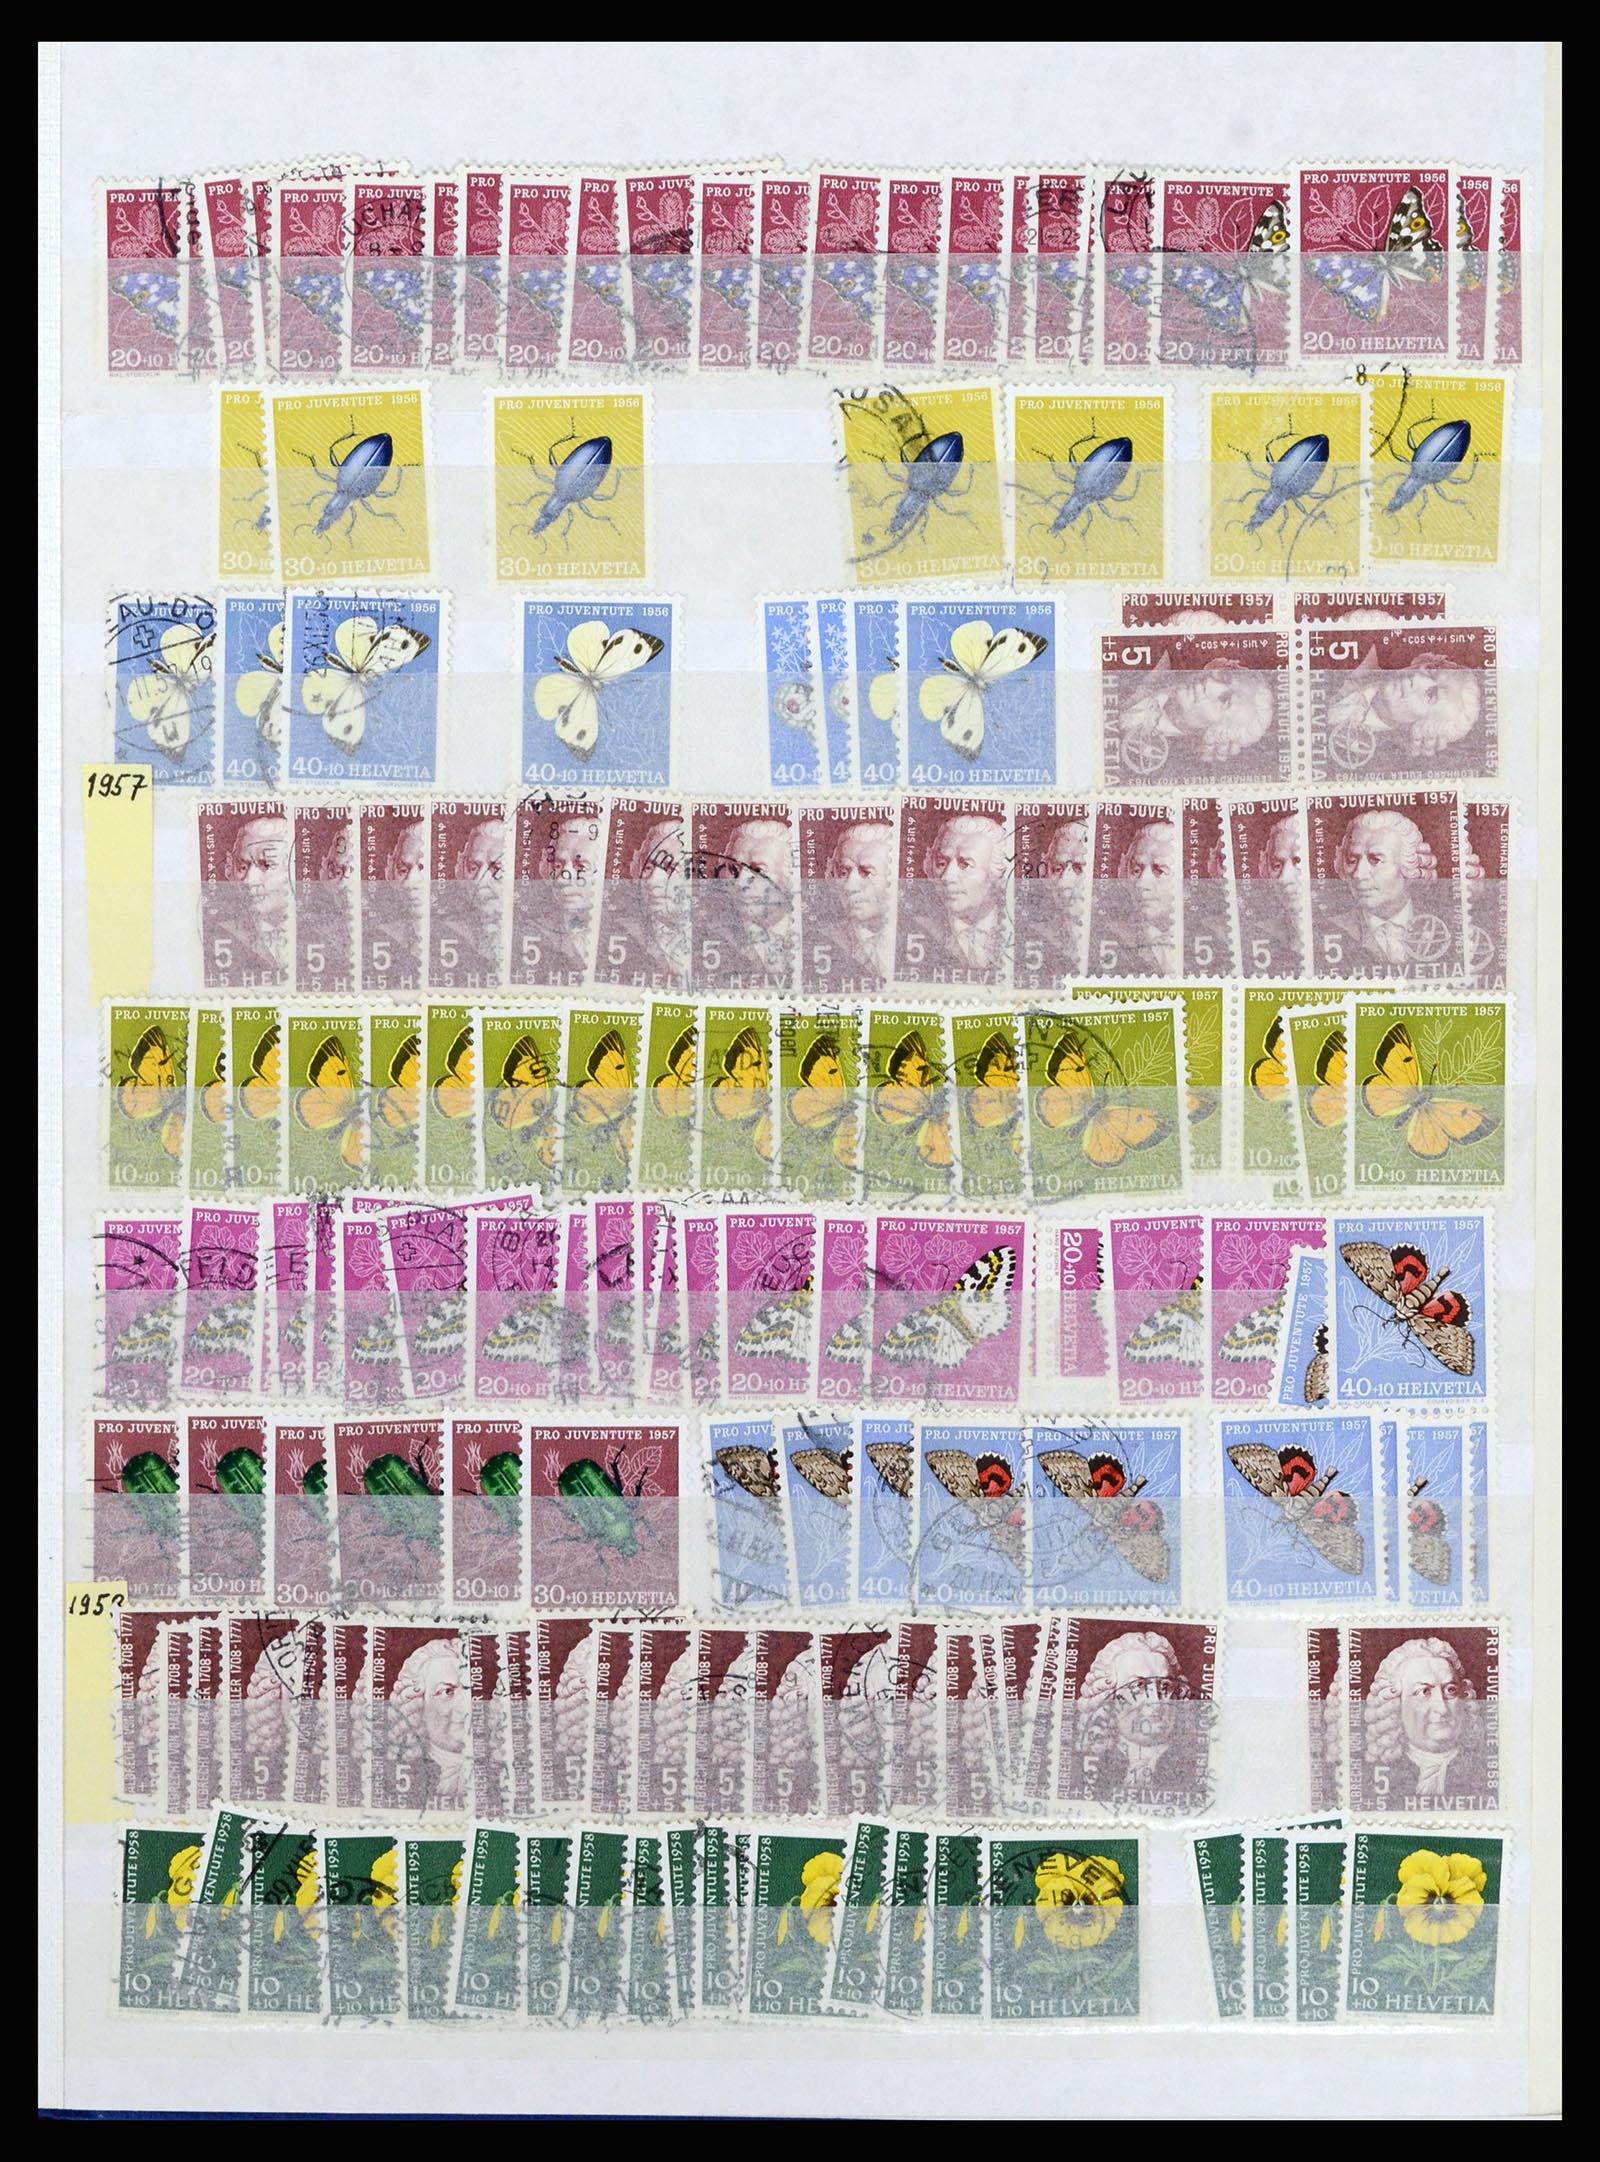 37061 013 - Stamp collection 37061 Switzerland 1913-2000.